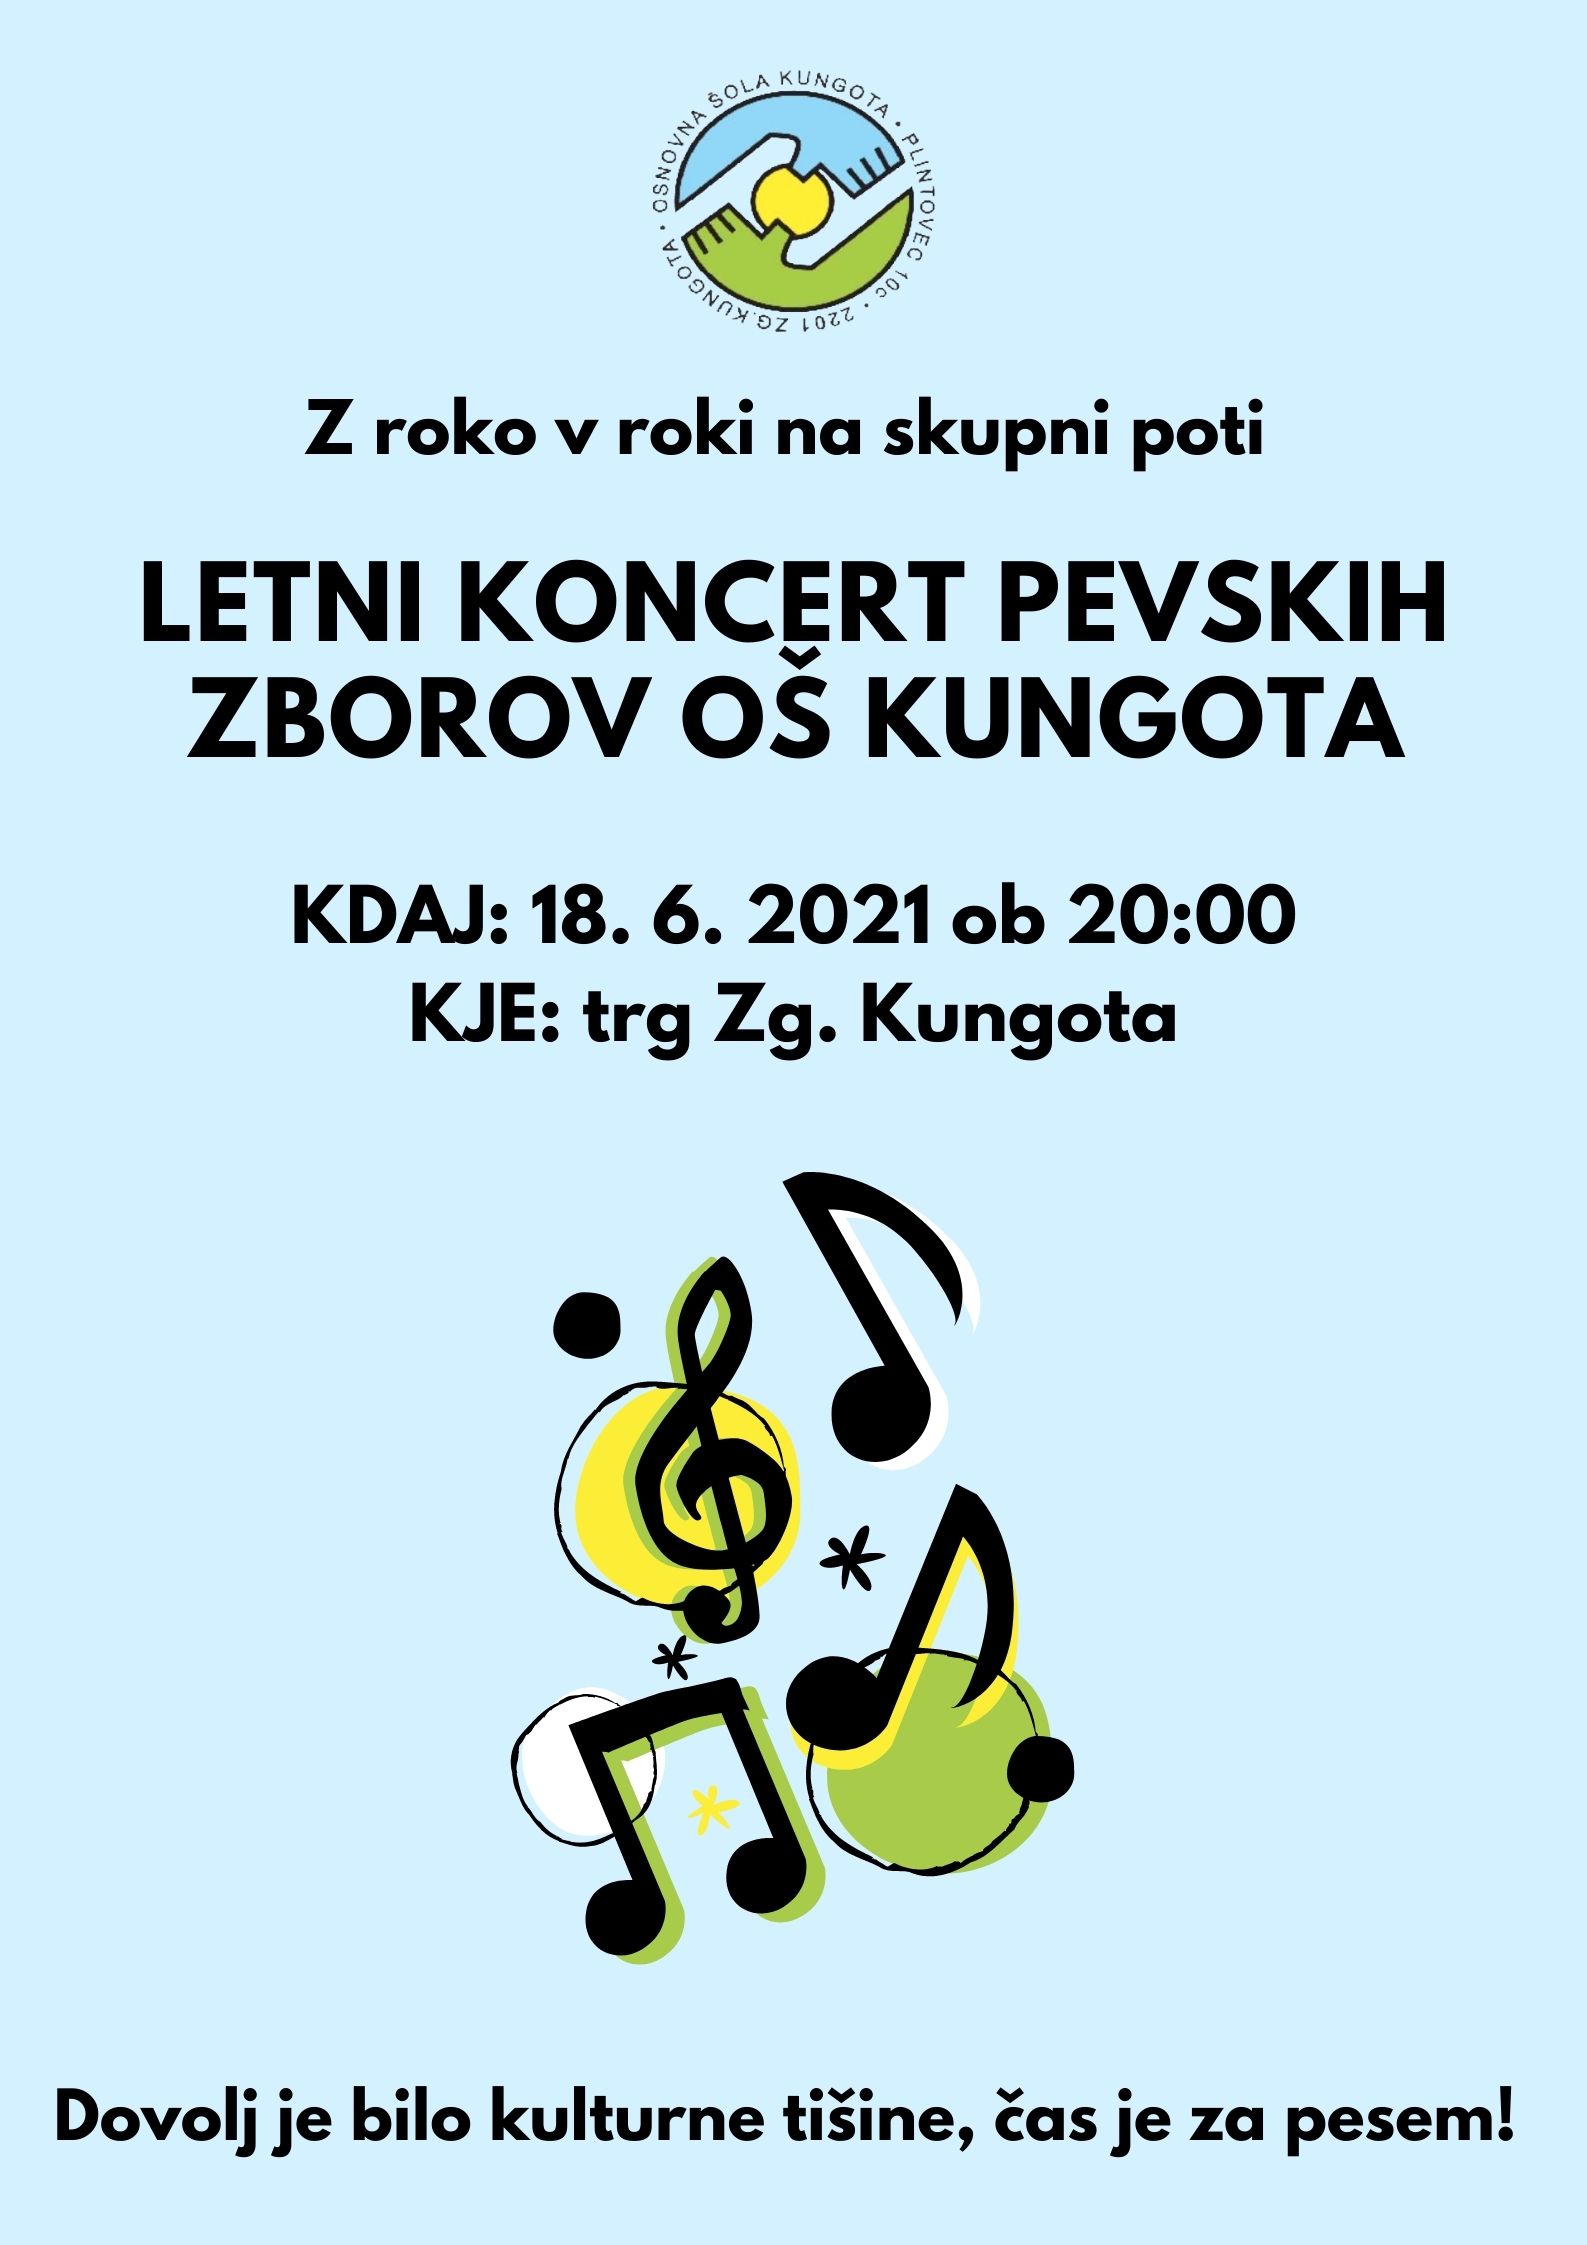 Letni koncert pevskih zborov OŠ Kungota _plakat.jpg